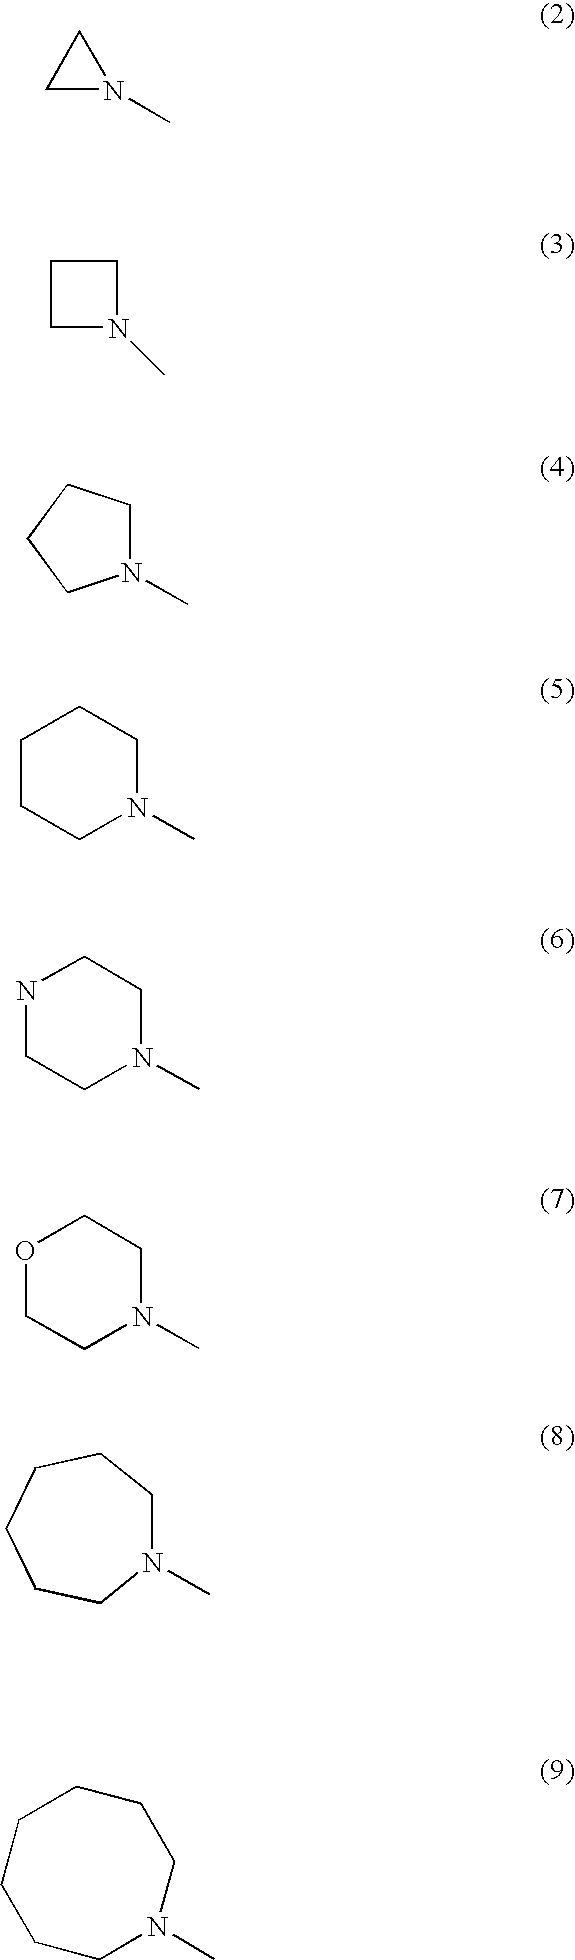 Abcg2 inhibitor